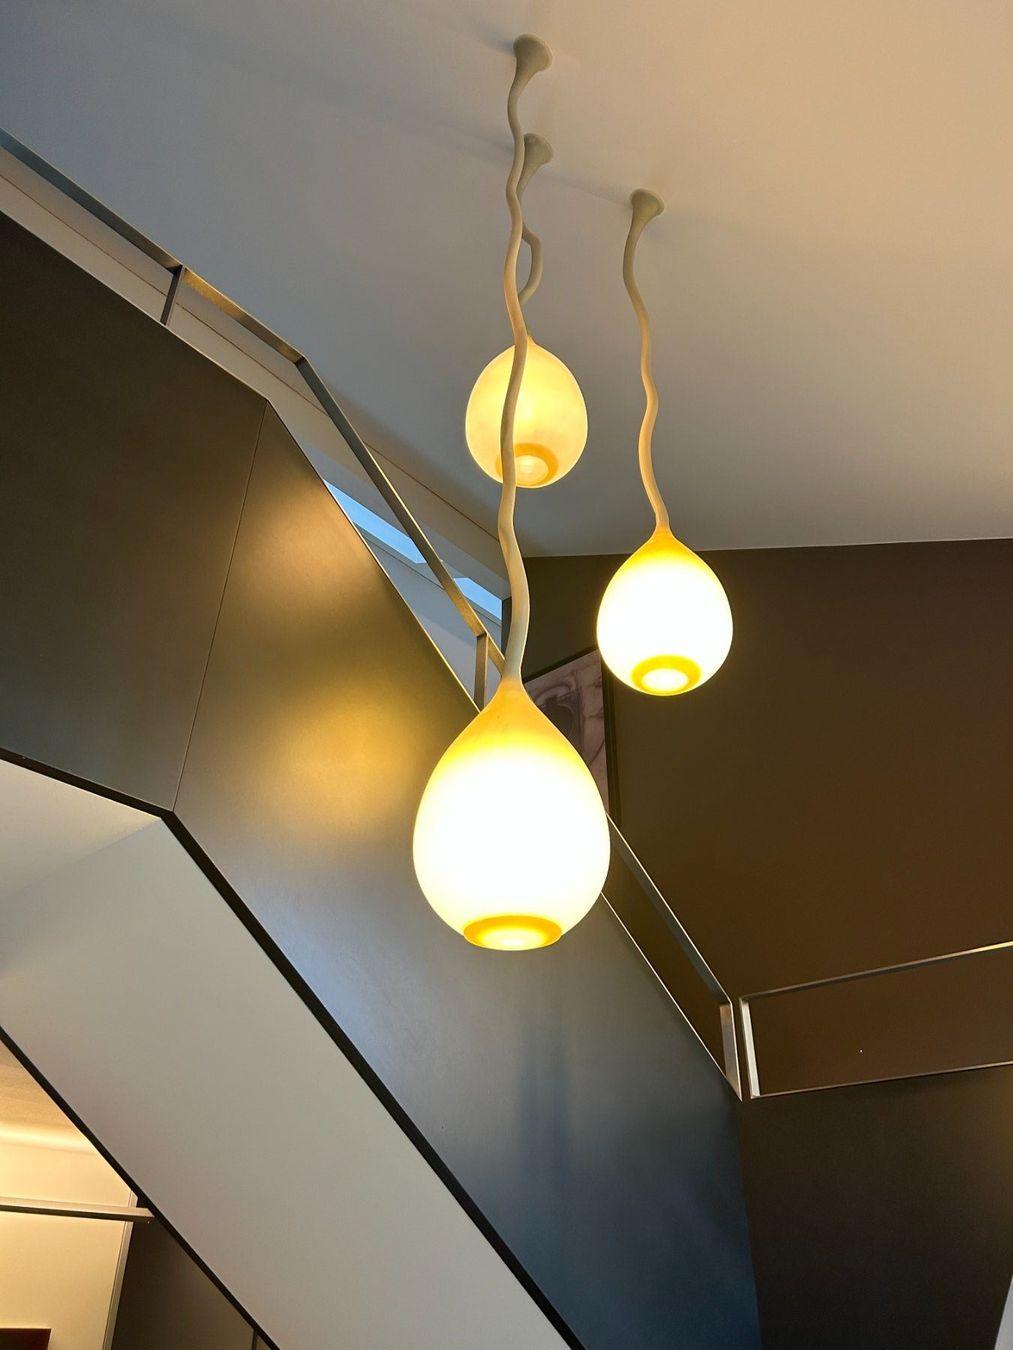 Rare Swiss Design Jingzi Ceiling Lamps, Herzog & De Meuron, for Belux, 2000s For Sale 7